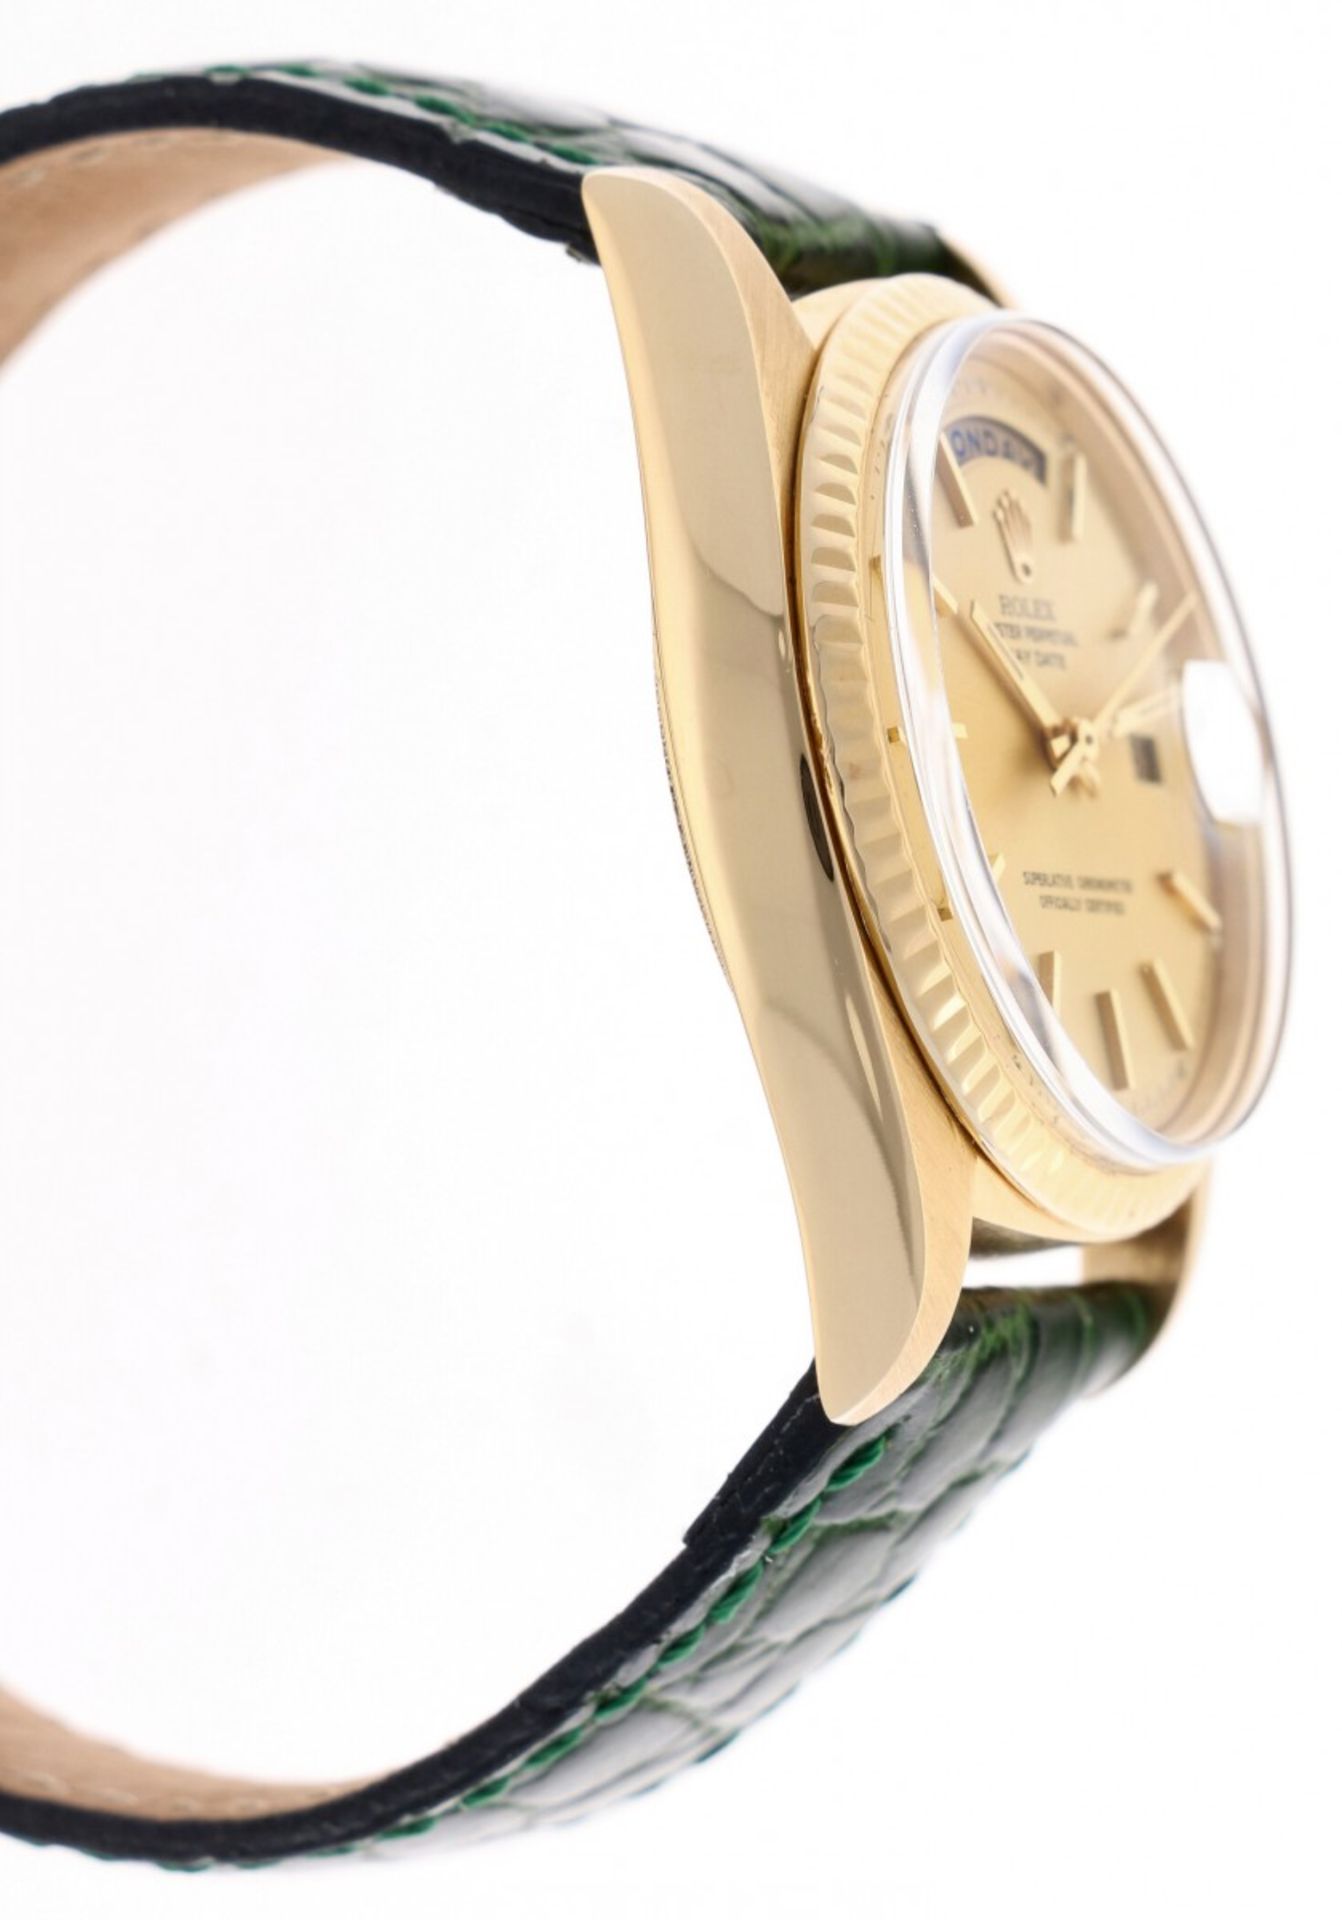 Rolex day date 1803 - Men's watch - ca. 1974 - Image 4 of 6